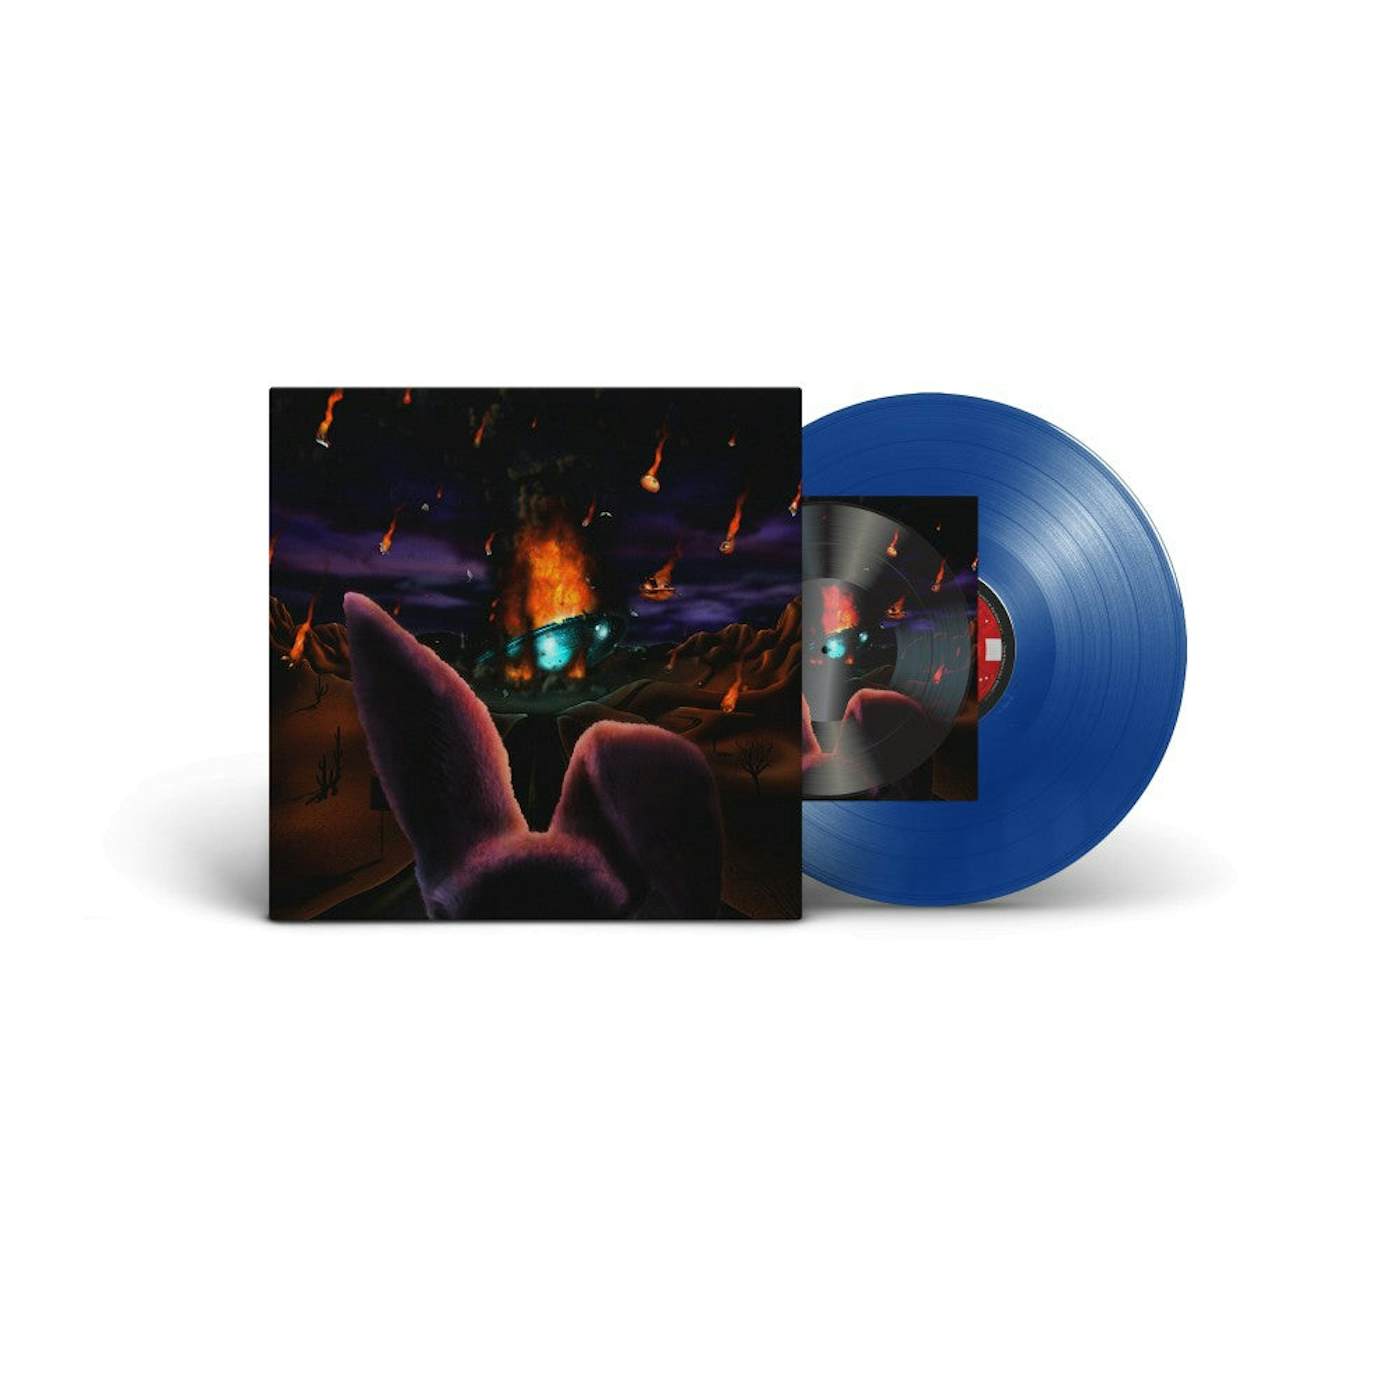 Freddie Gibbs $oul $old $eparately Spotify Fans First Cobal Blue Vinyl LP